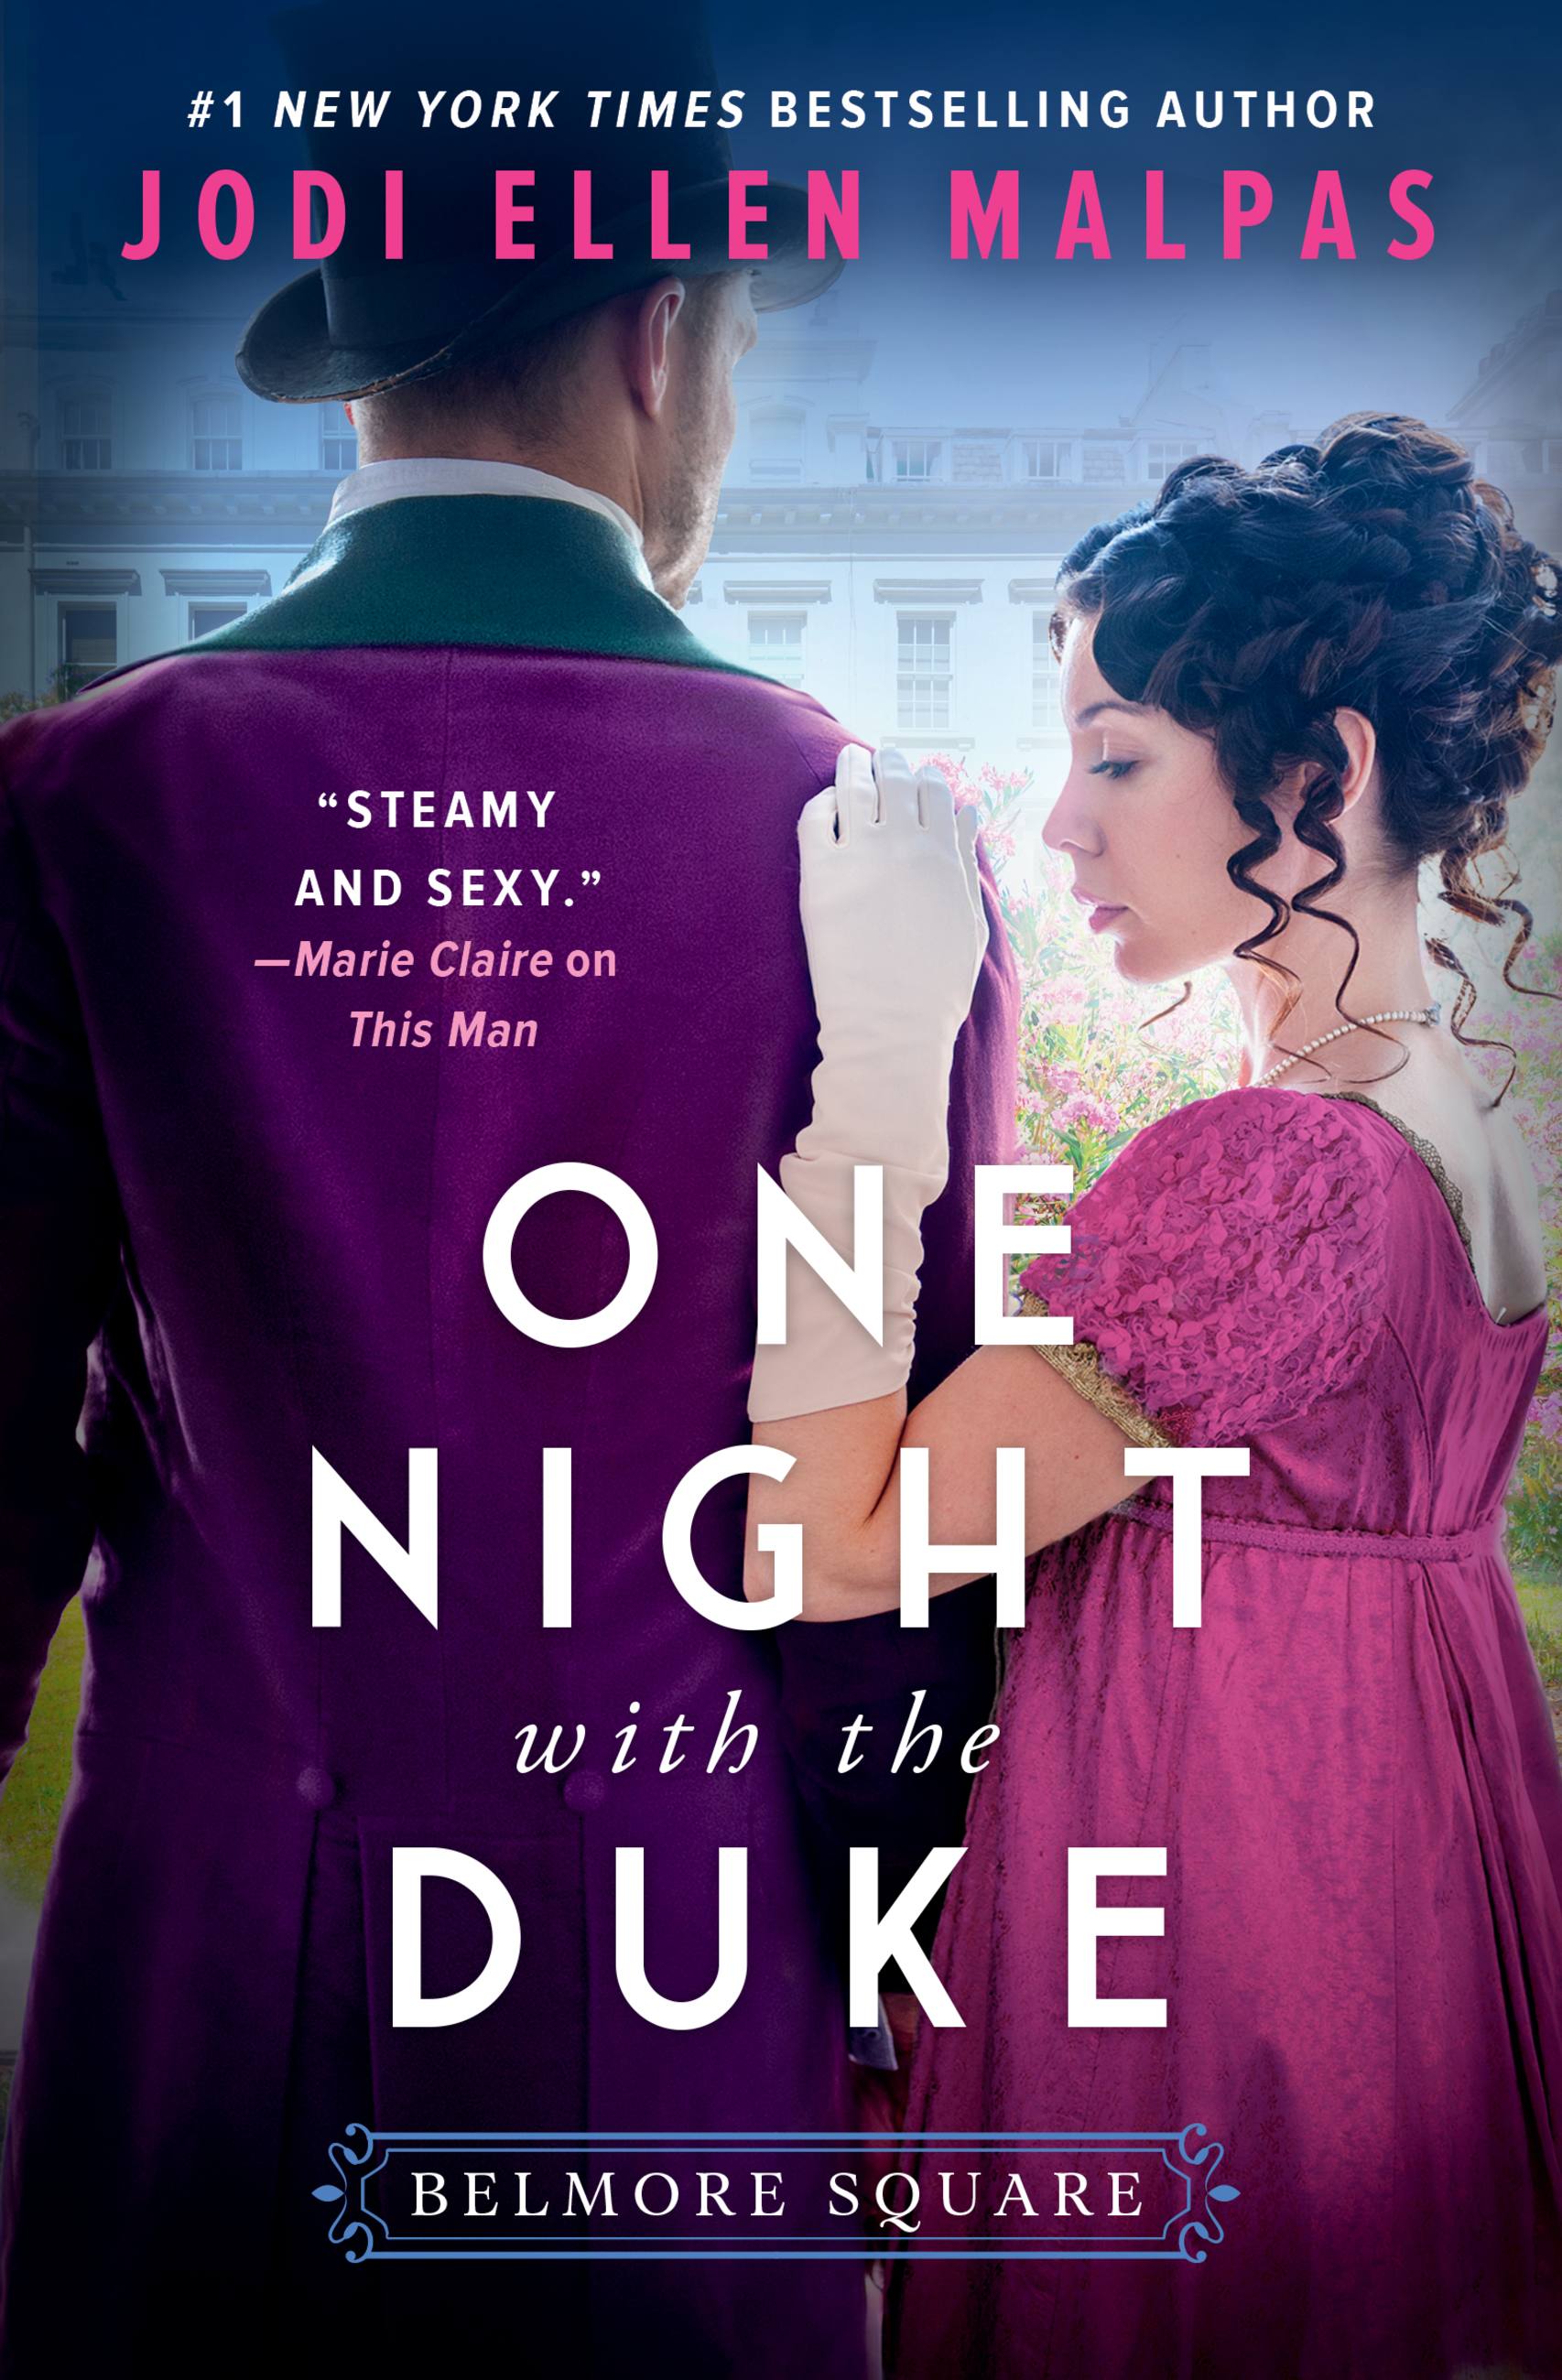 Jodi　Book　Hachette　Ellen　with　One　Night　Malpas　by　the　Duke　Group